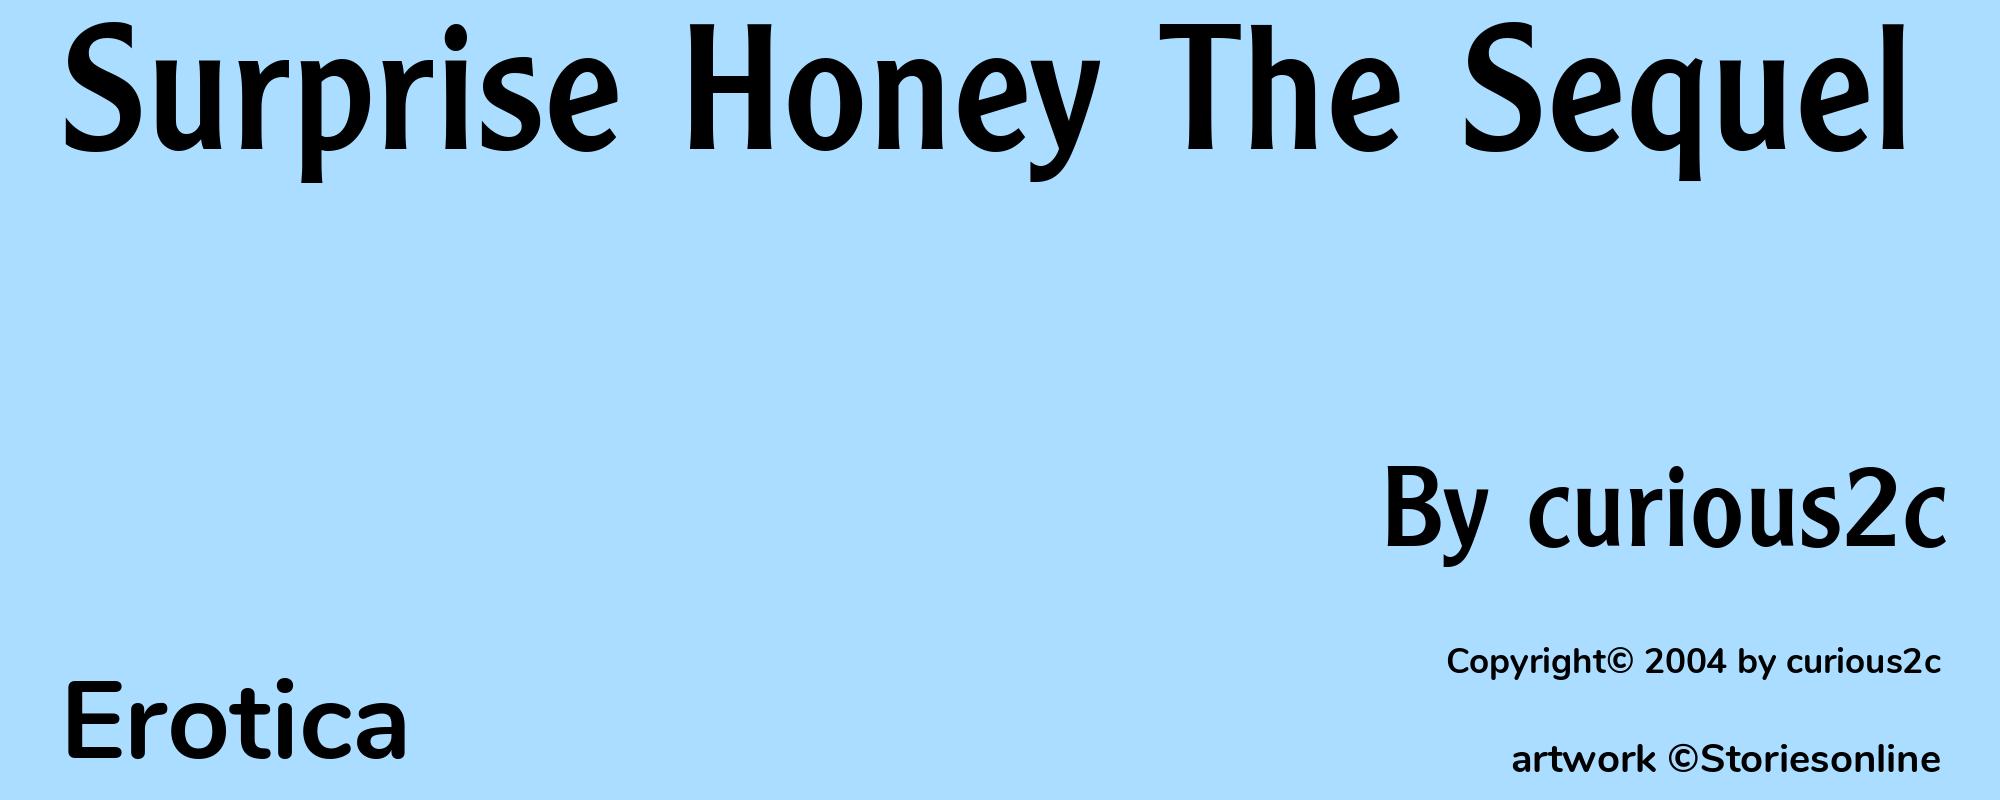 Surprise Honey The Sequel - Cover